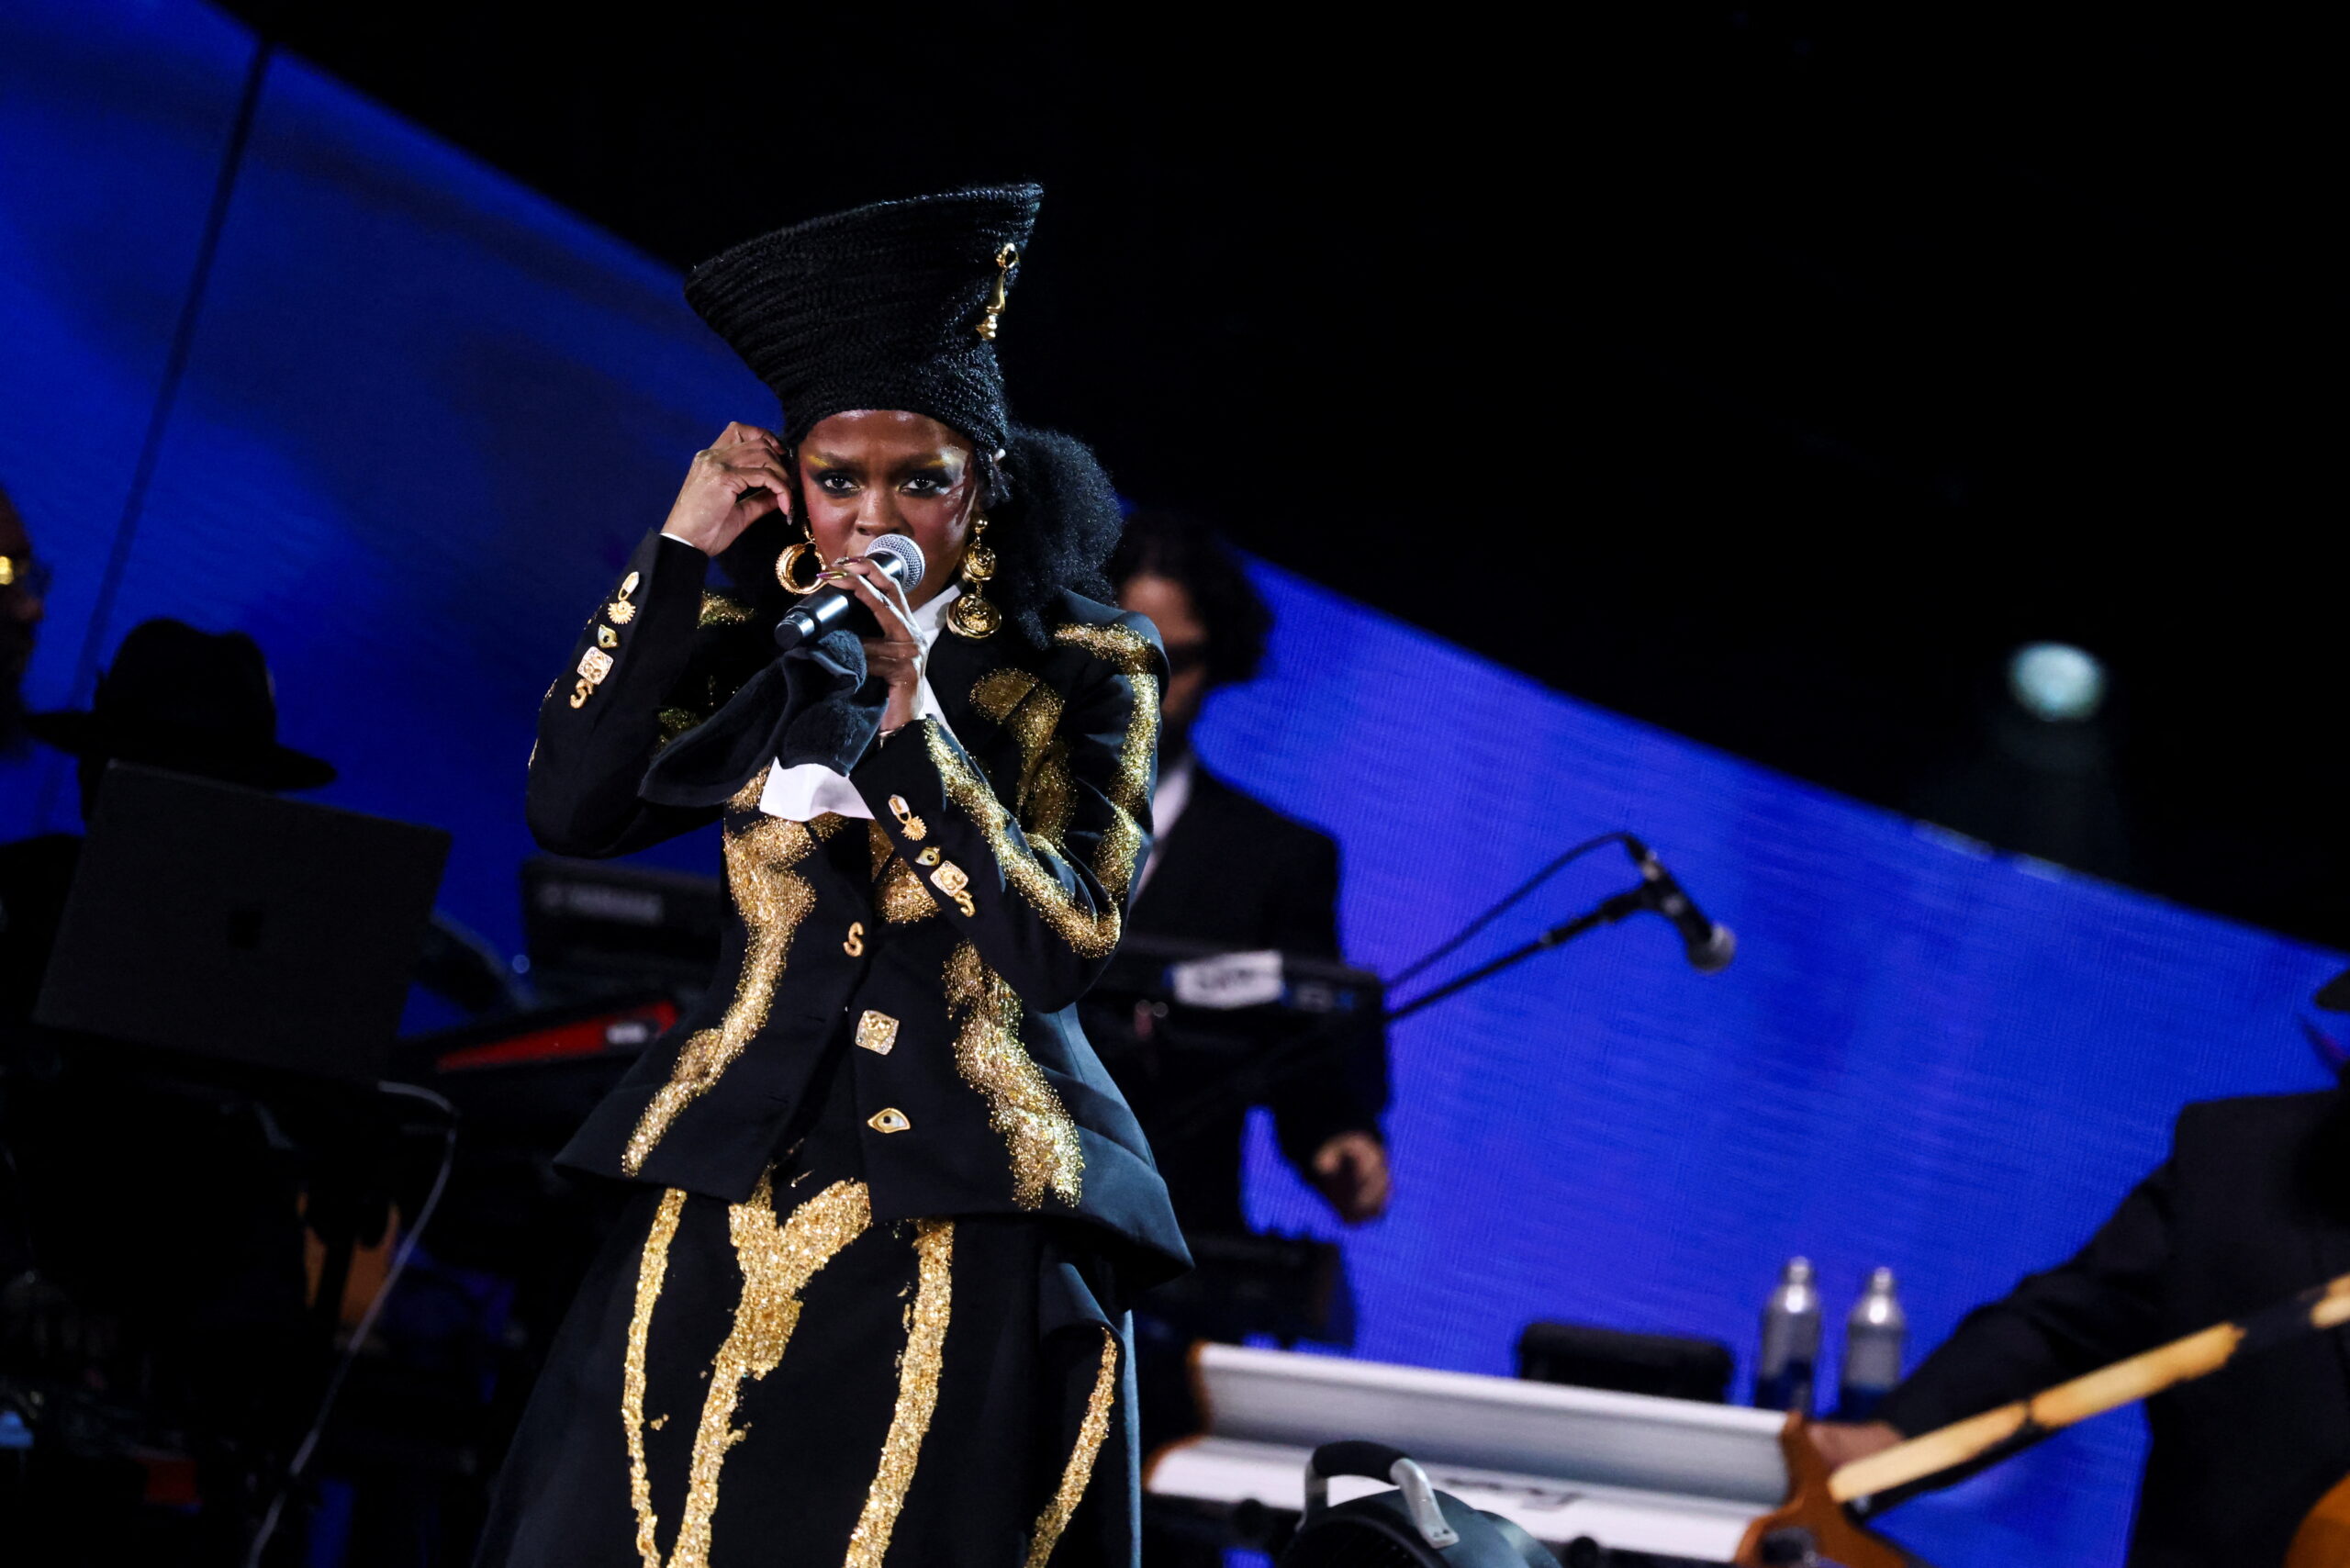 Lauryn Hill no Brasil: festival Chic Show confirma show da cantora no país